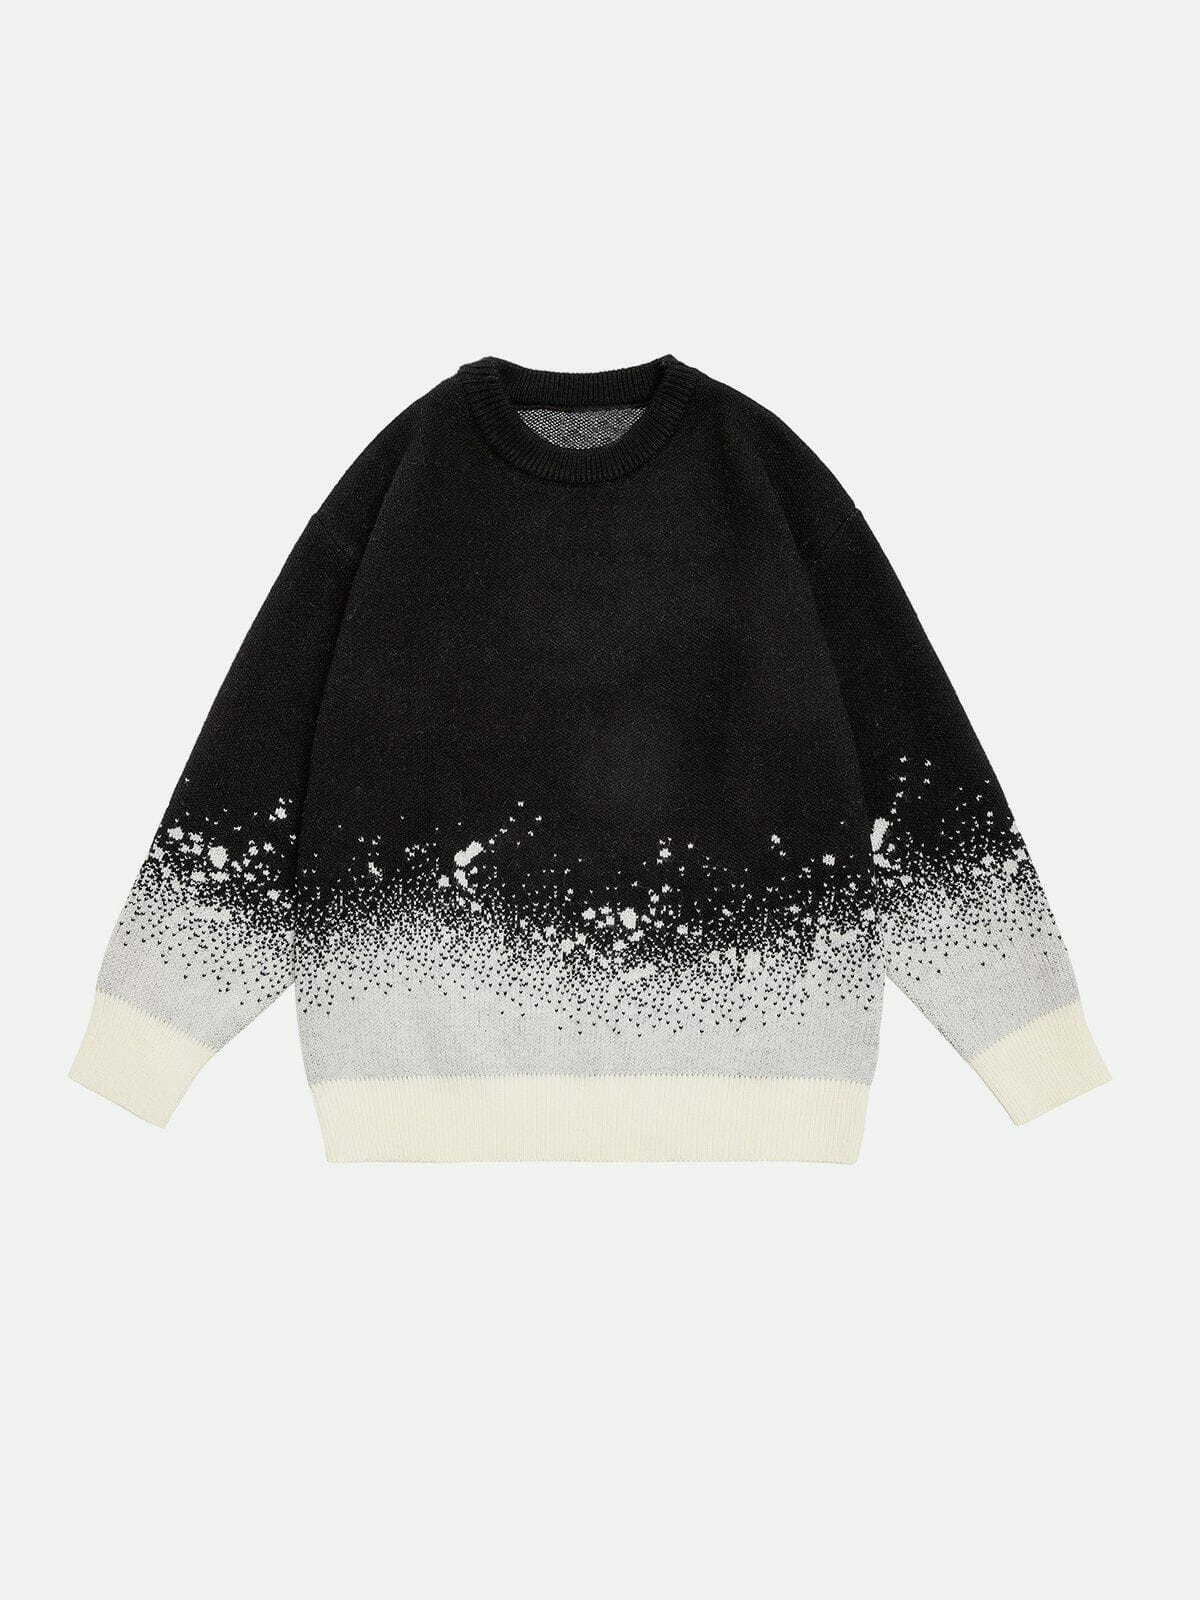 starry night gradient sweater edgy urban gradient knit 6918